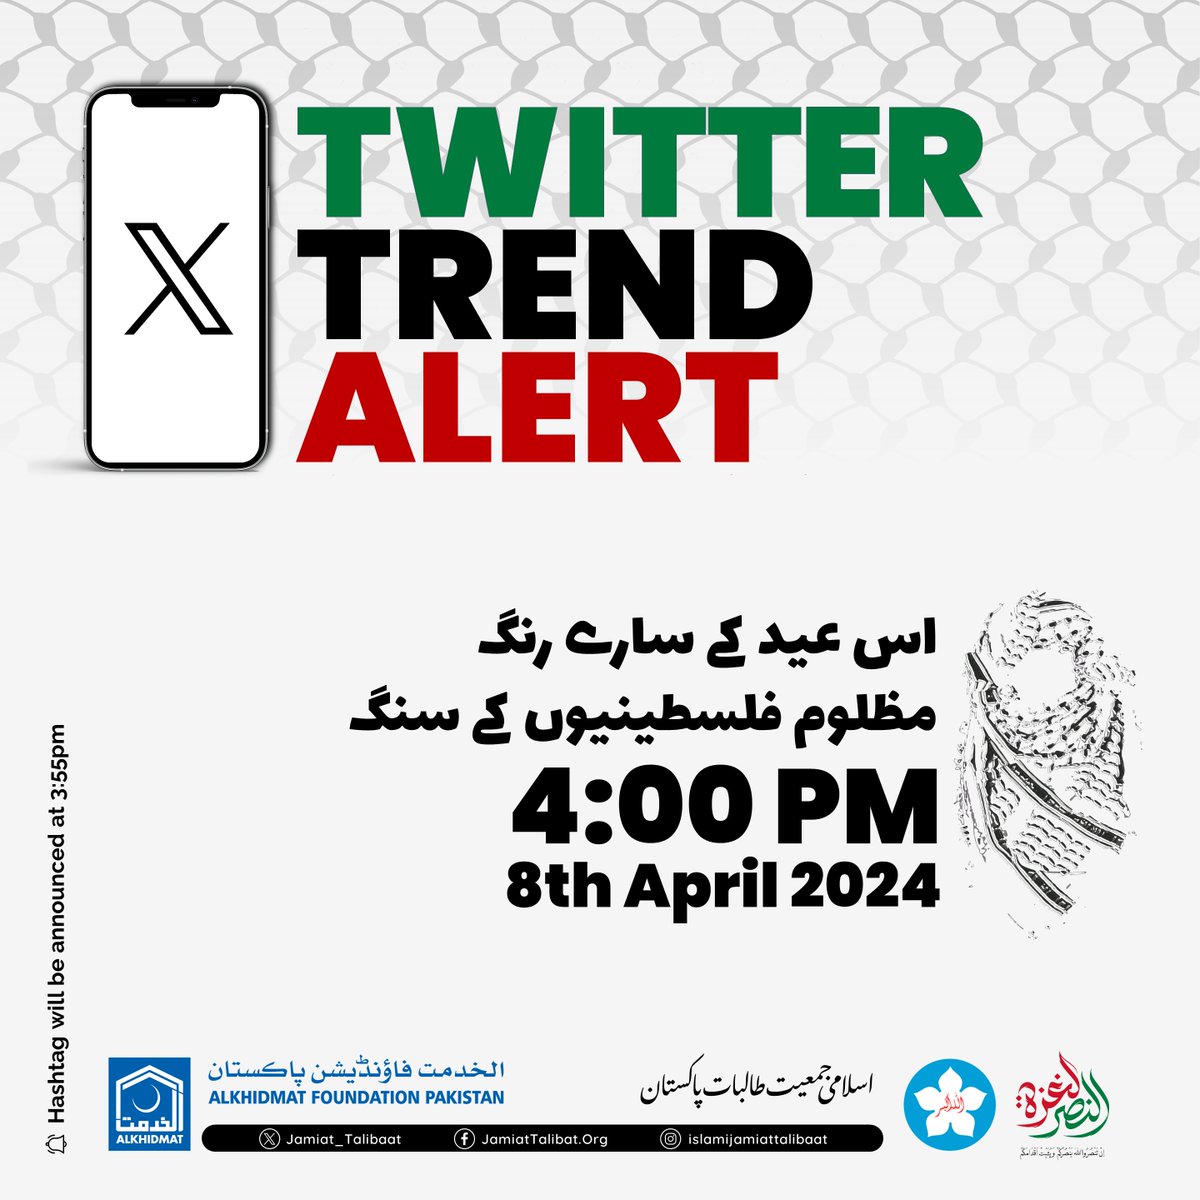 🇵🇸 𝐒𝐡𝐚𝐫𝐞 𝐖𝐢𝐝𝐞𝐥𝐲: 𝐓𝐰𝐢𝐭𝐭𝐞𝐫 𝐓𝐫𝐞𝐧𝐝 𝐟𝐨𝐫 𝐆𝐚𝐳𝐚 📍 Monday, 8 April - 4:00 PM #️⃣ The hashtag will be announced on the social media sites at 3:55pm. #Gaza #Palestine #Alkhidmat #Support #Emergency #AlkhidmatInPalestine #islamijamiattalibat